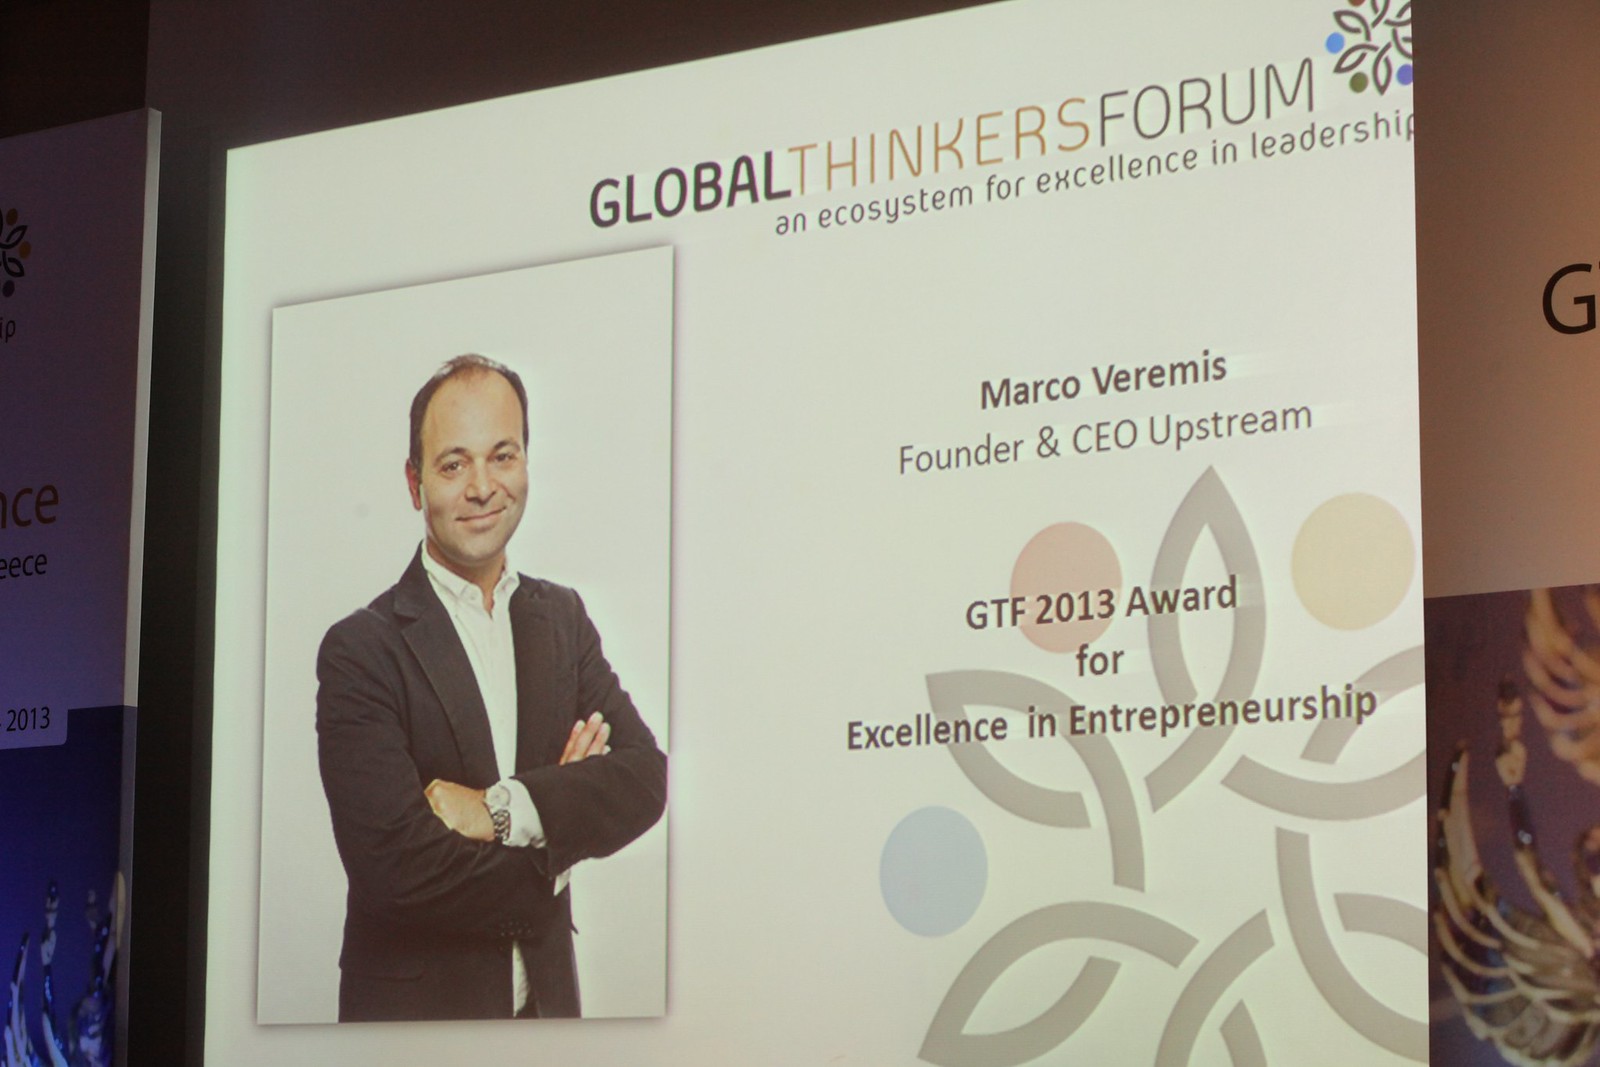 Panos Veremis CEO Upstream, GTF 2013 Award Honoree for Excellence in Entrepreneurship